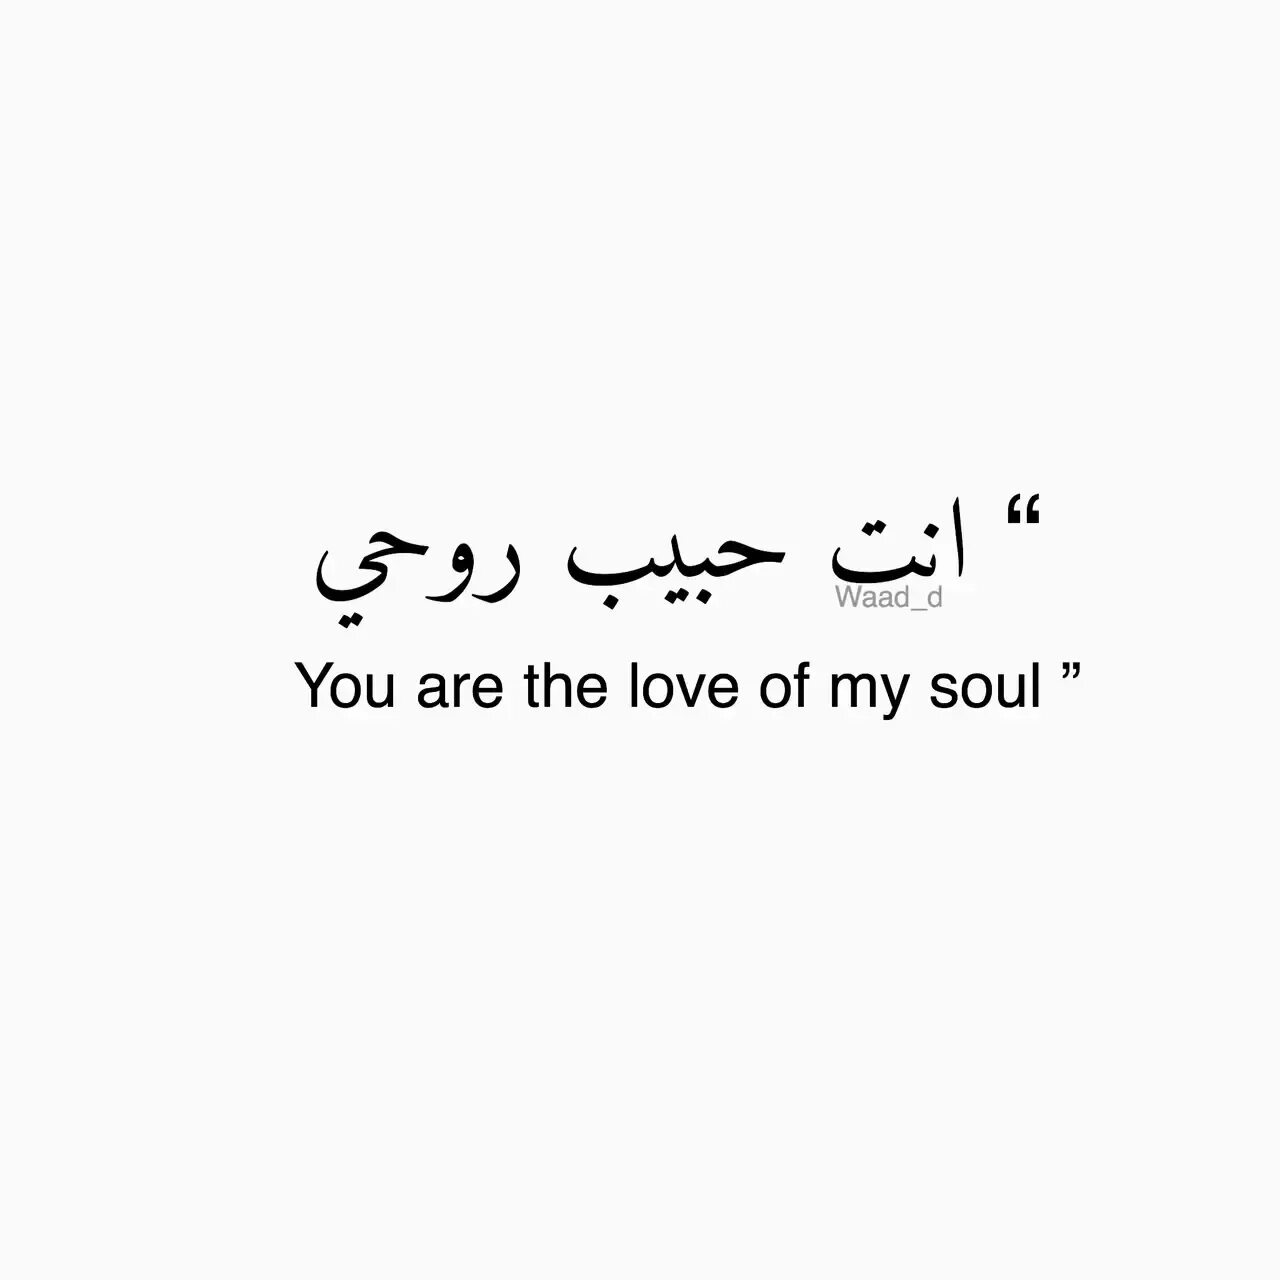 Красивые слова на арабском. Красивые фразы на арабском. Арабские фразы на арабском. Красивые надписи на арабском языке.